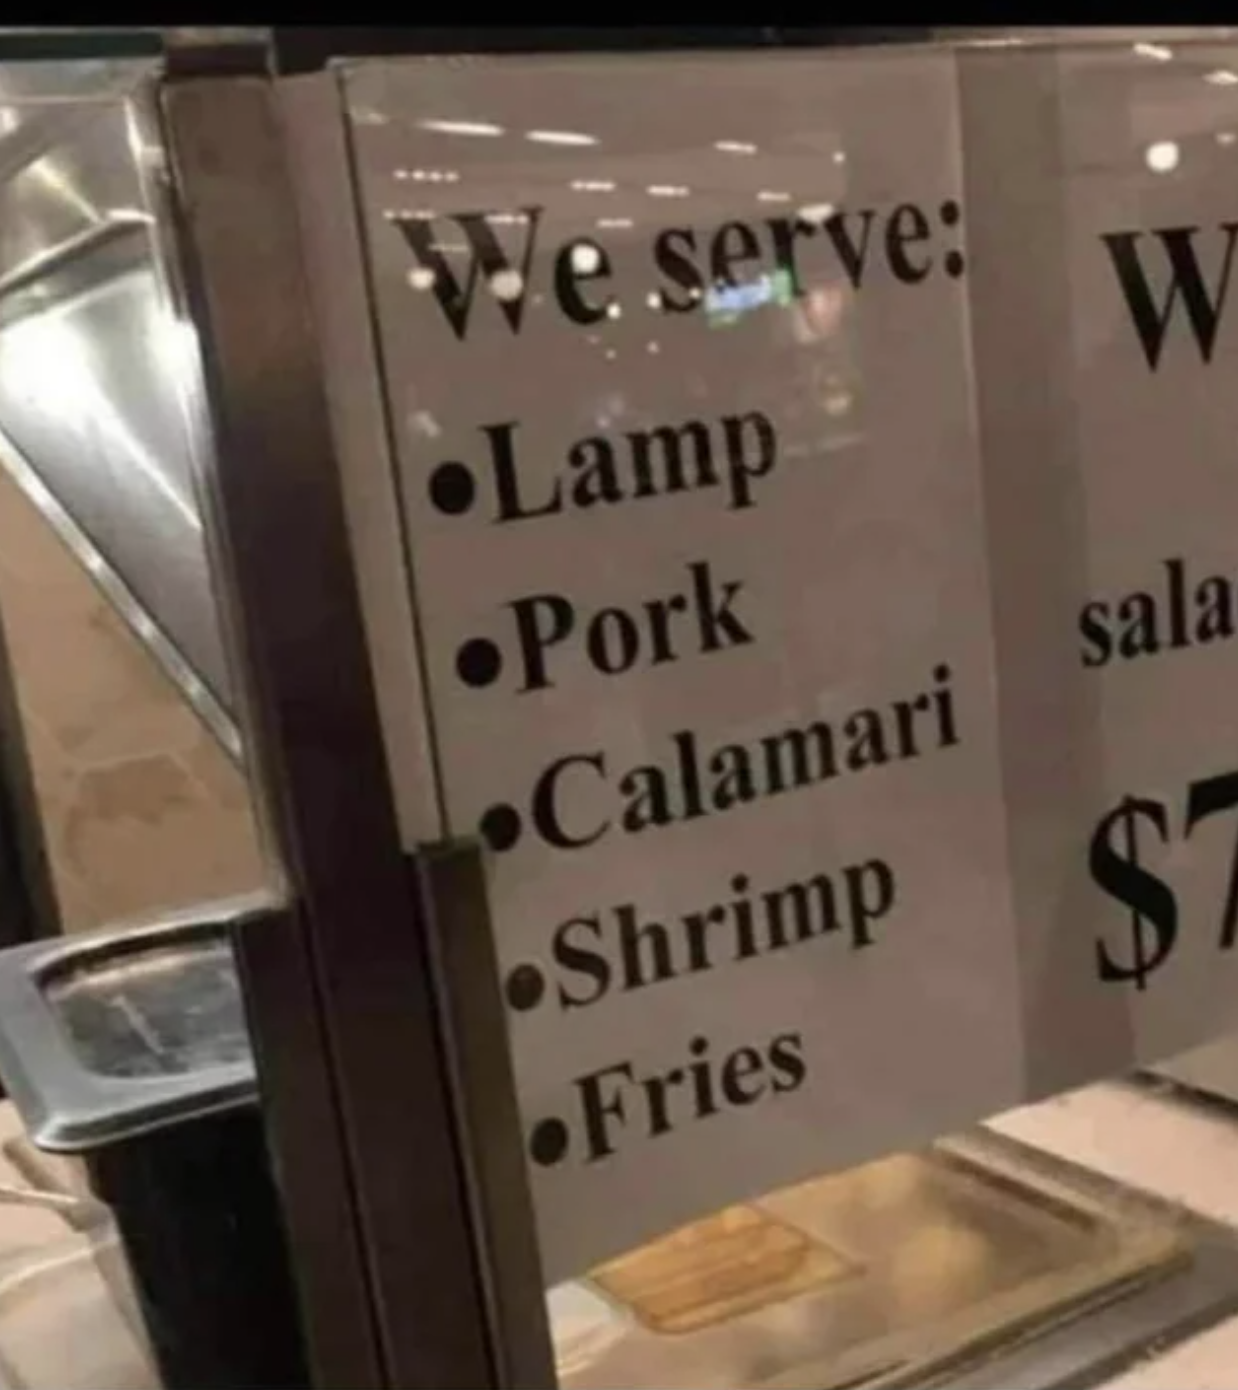 we serve lamp, pork, shrimp, fries